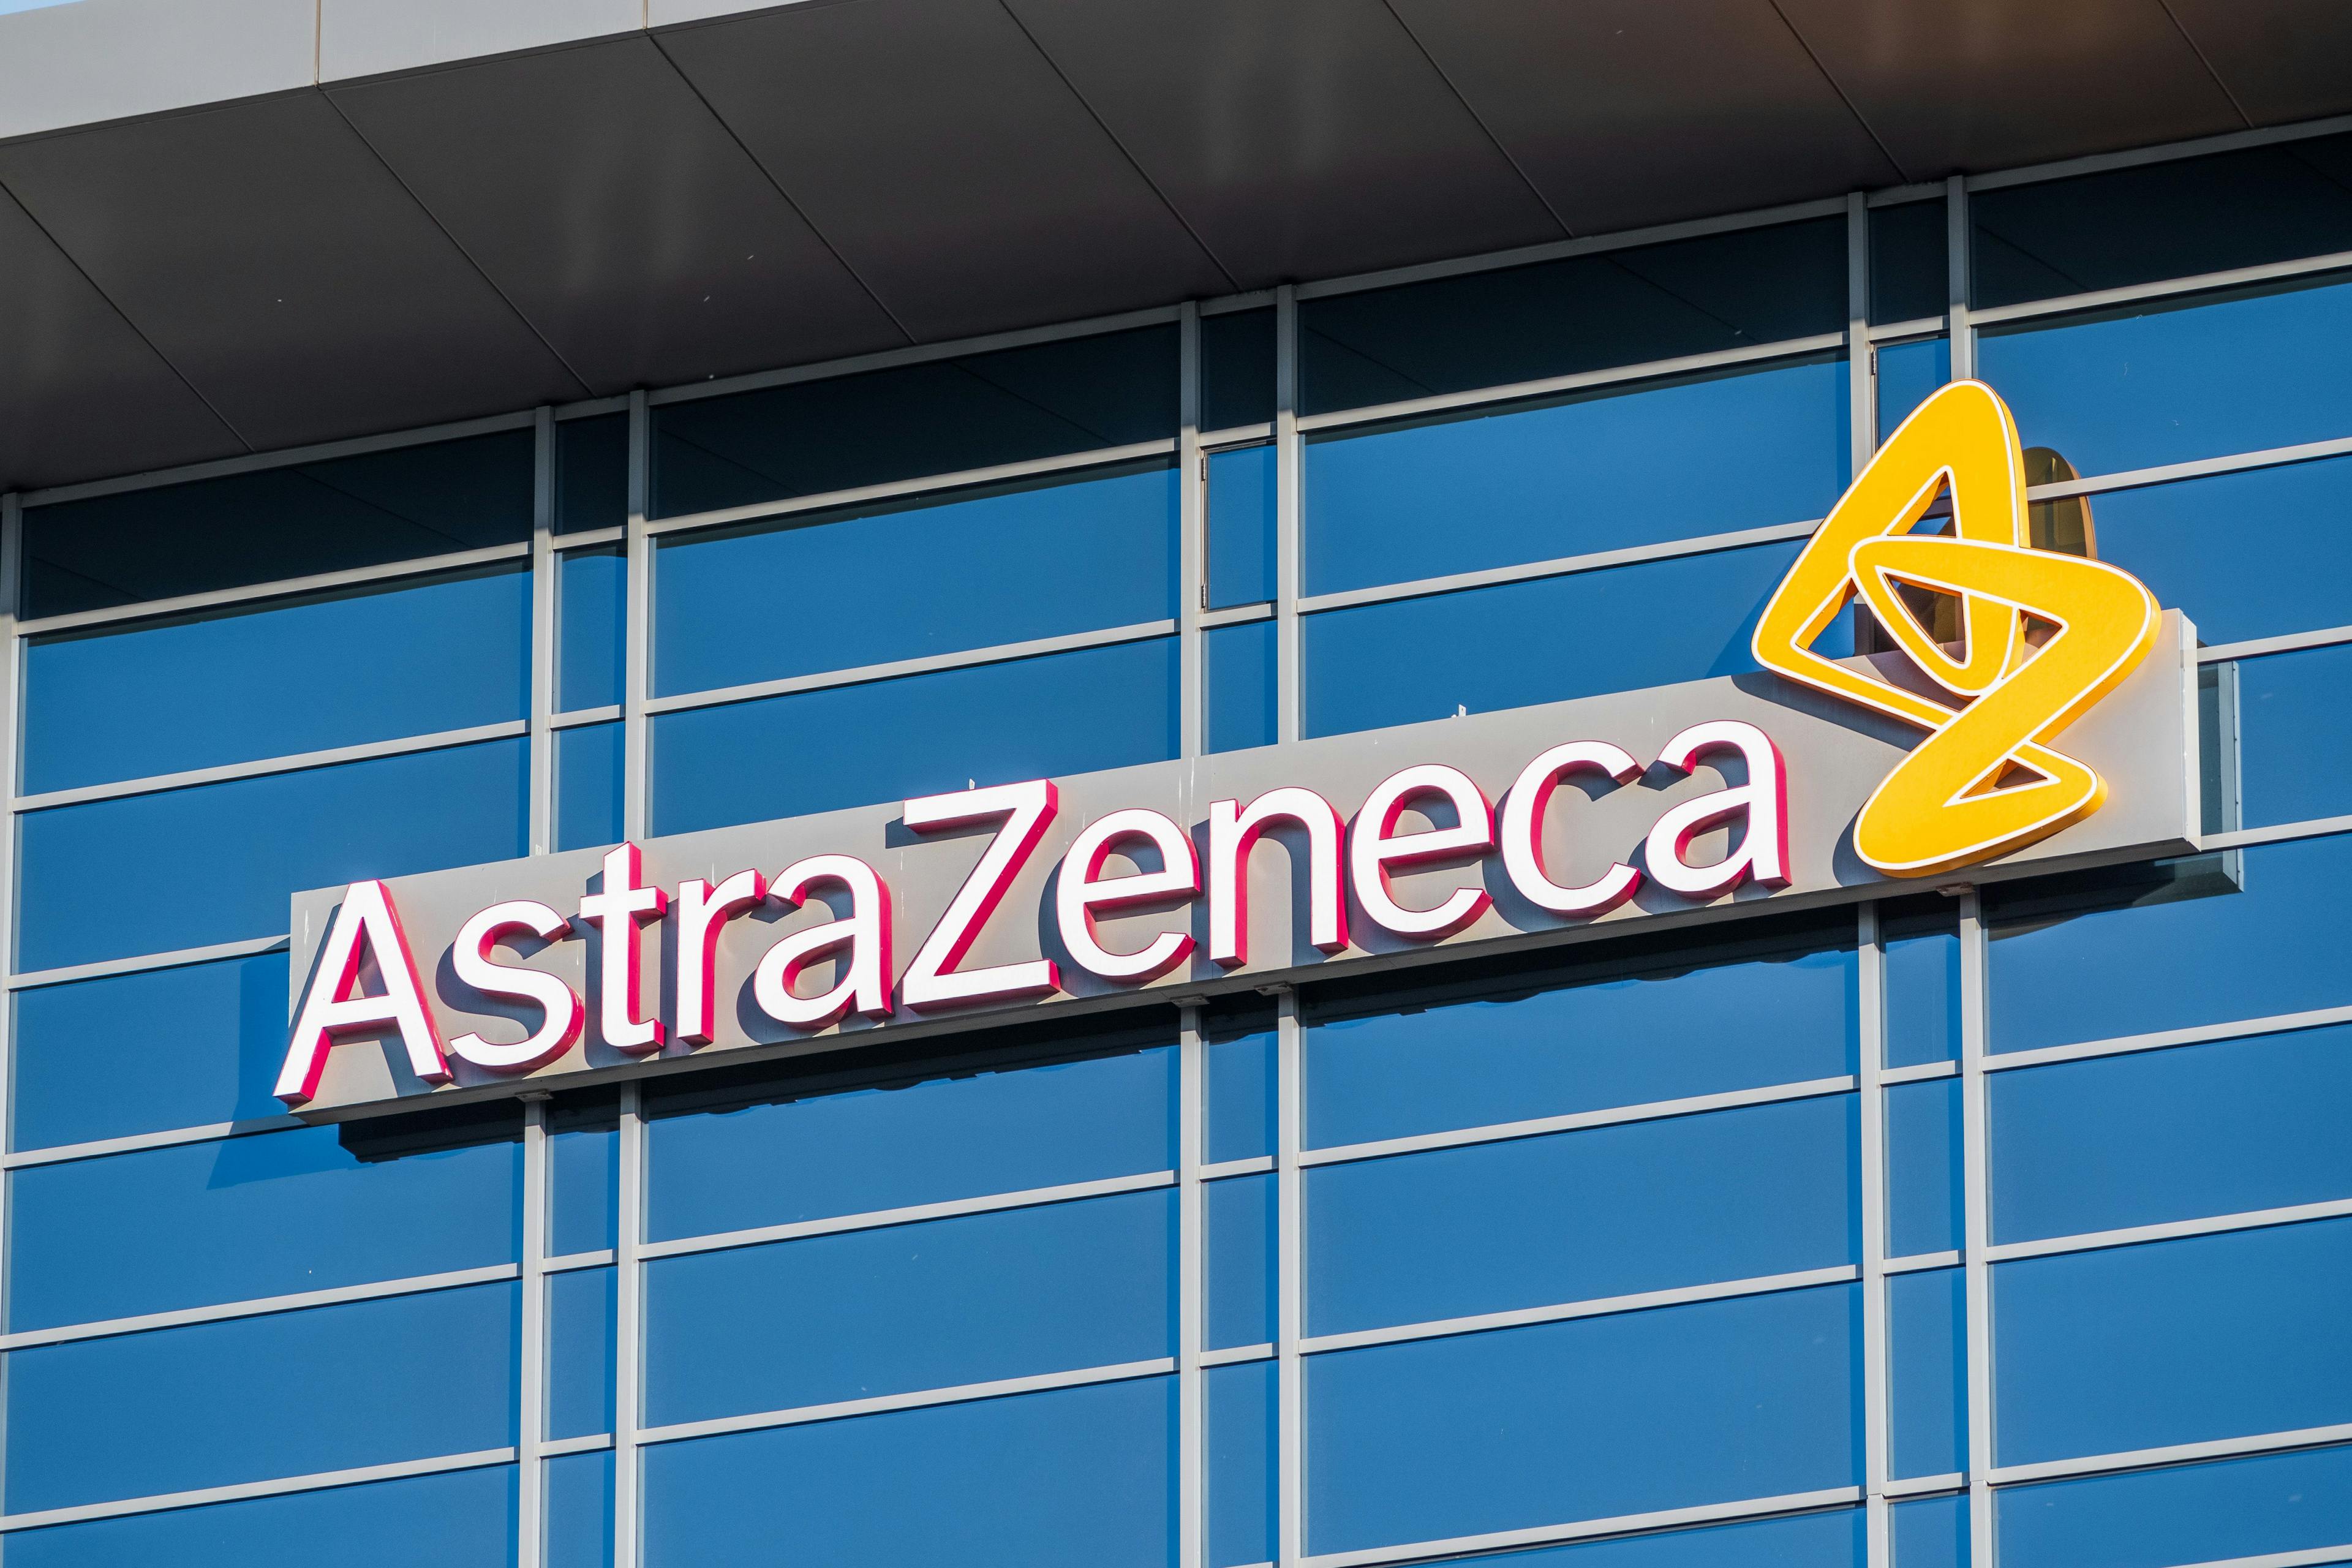 AstraZeneca Building | image credit: Sundry Photography - stock.adobe.com